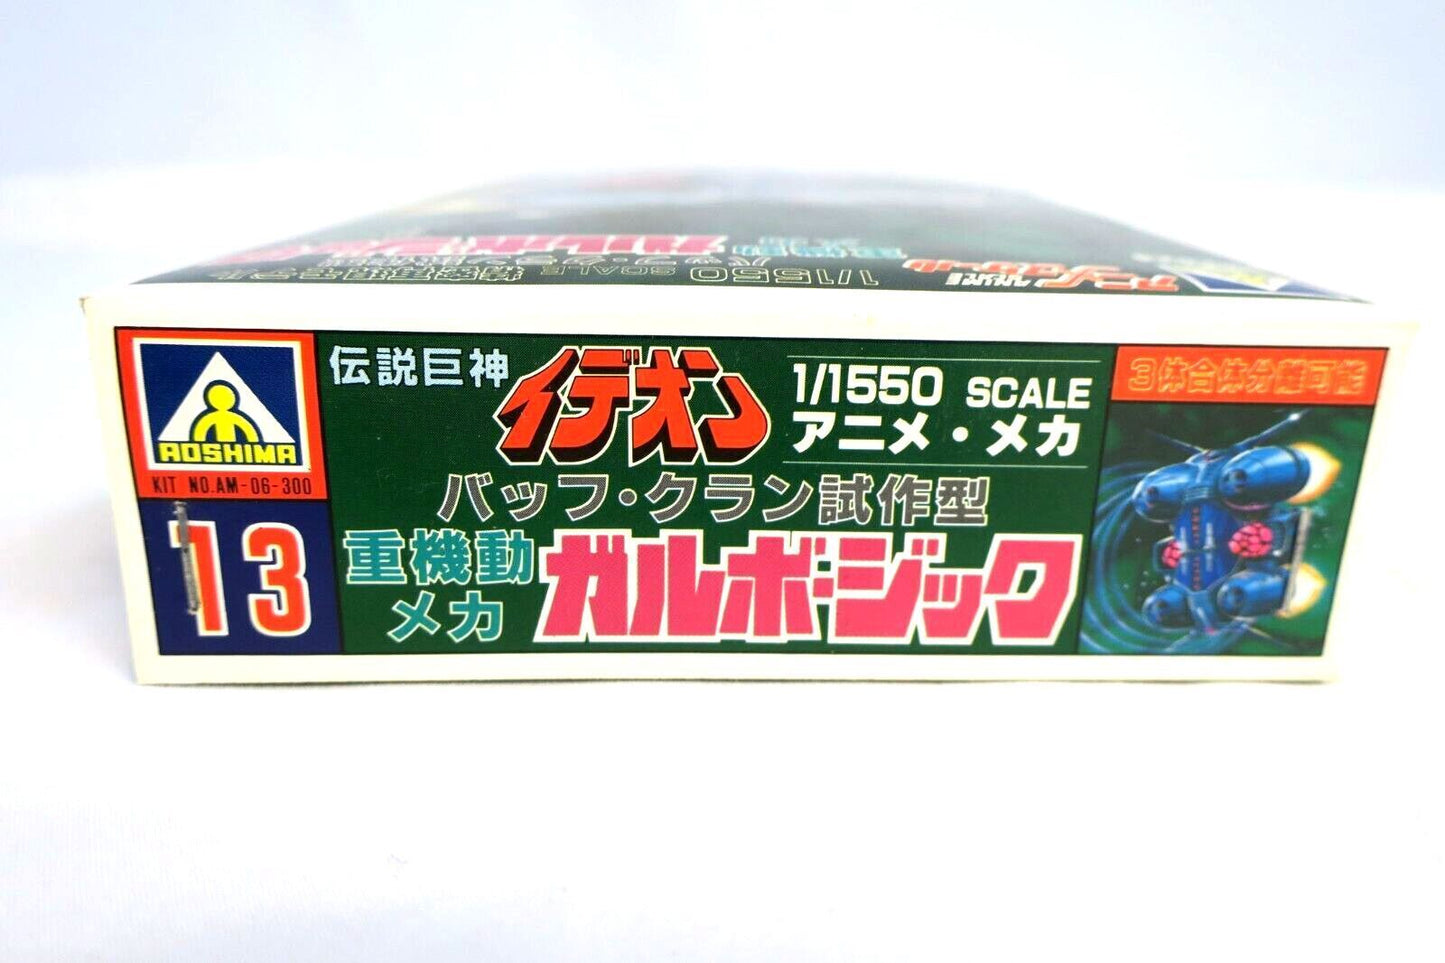 Aoshima Space Runaway Ideon Galbo Zic 1/1550 Scale Model Kit AM-06-300 E10